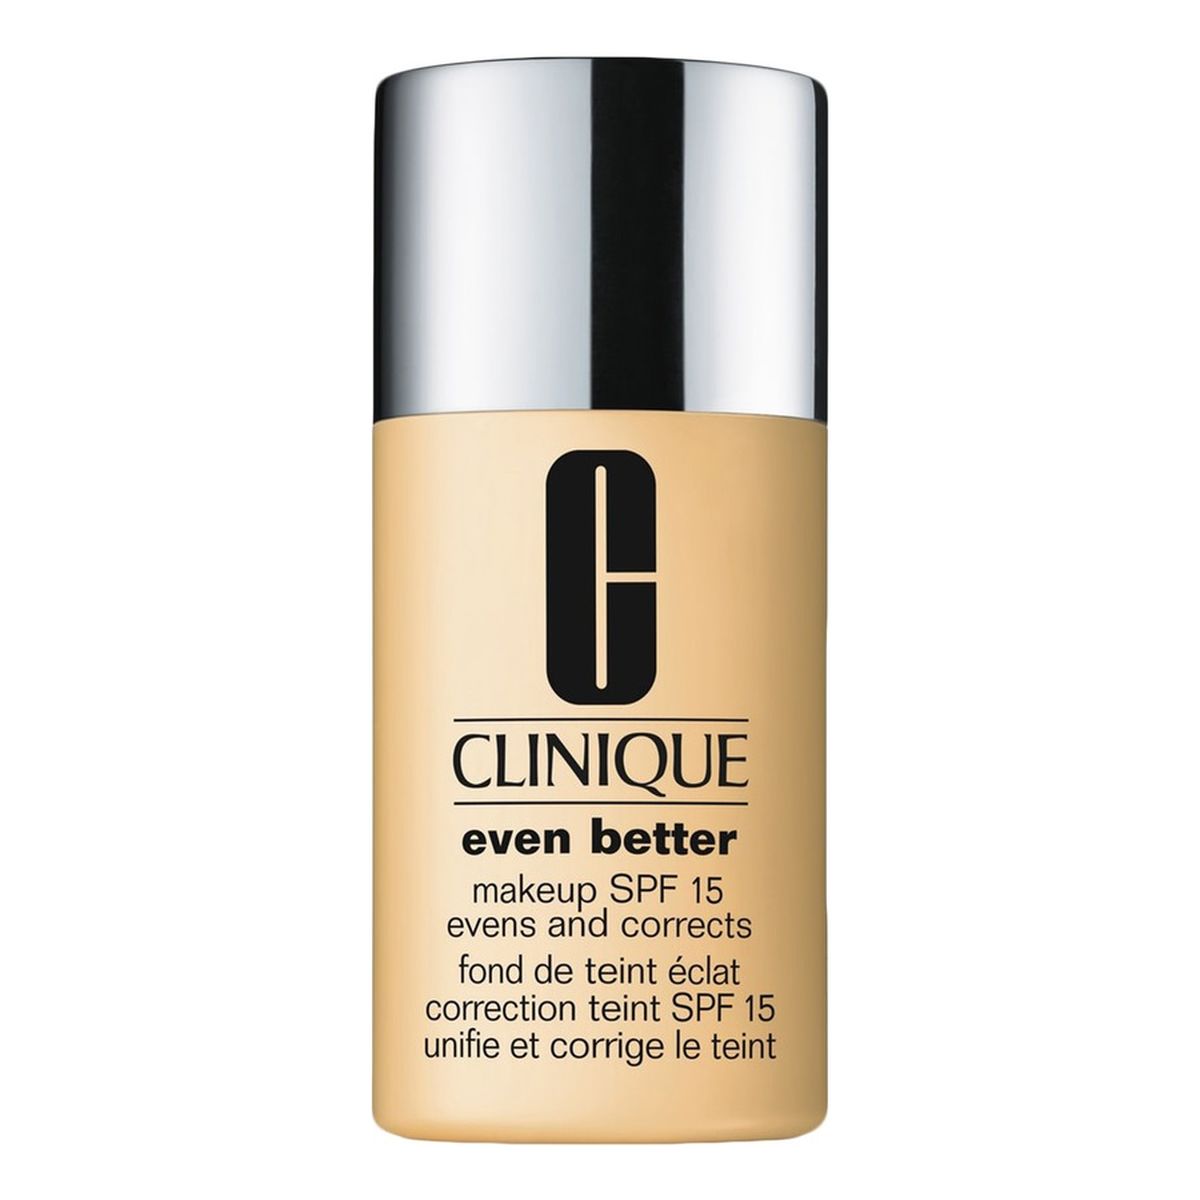 Clinique Even Better Makeup SPF15 Evens And Corrects Podkład wyrównujący koloryt skóry 30ml